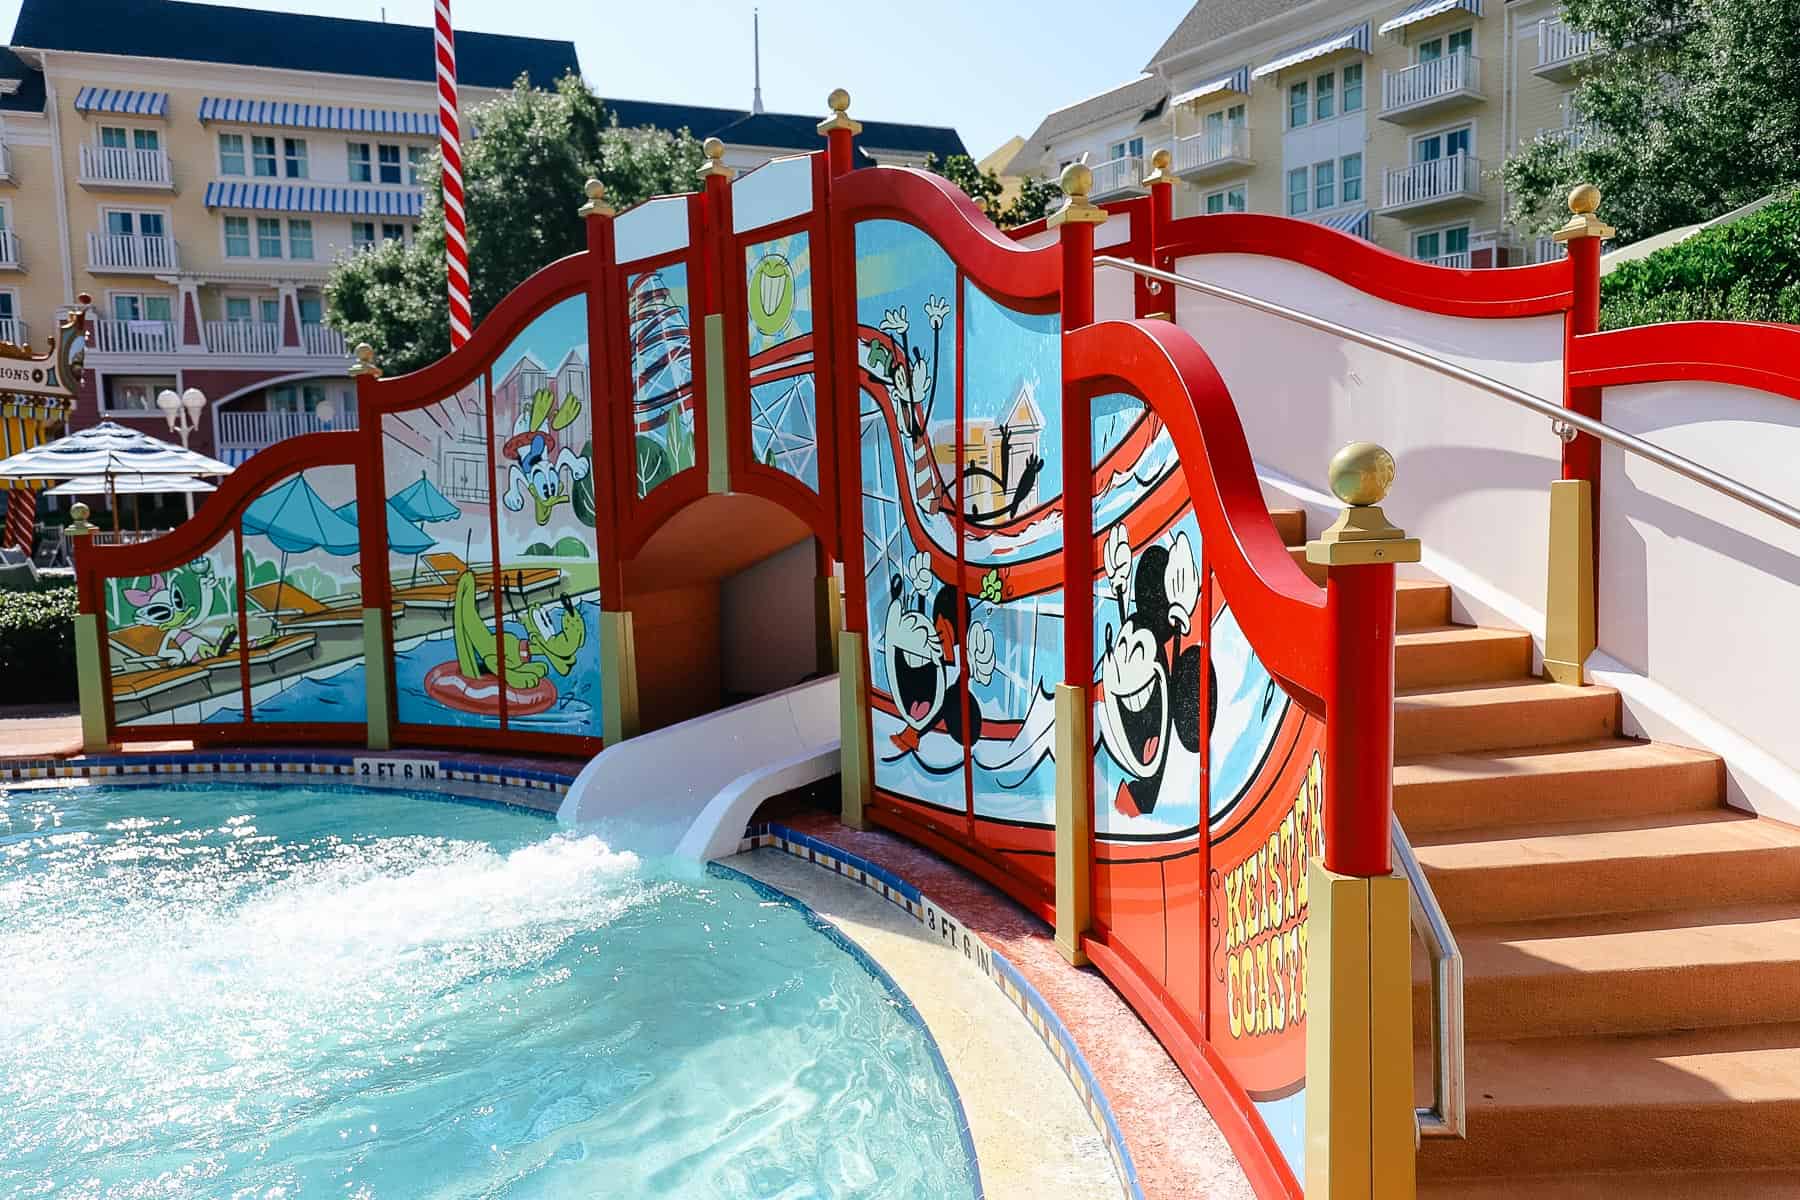 The Keister Coaster Slide at Disney's Boardwalk